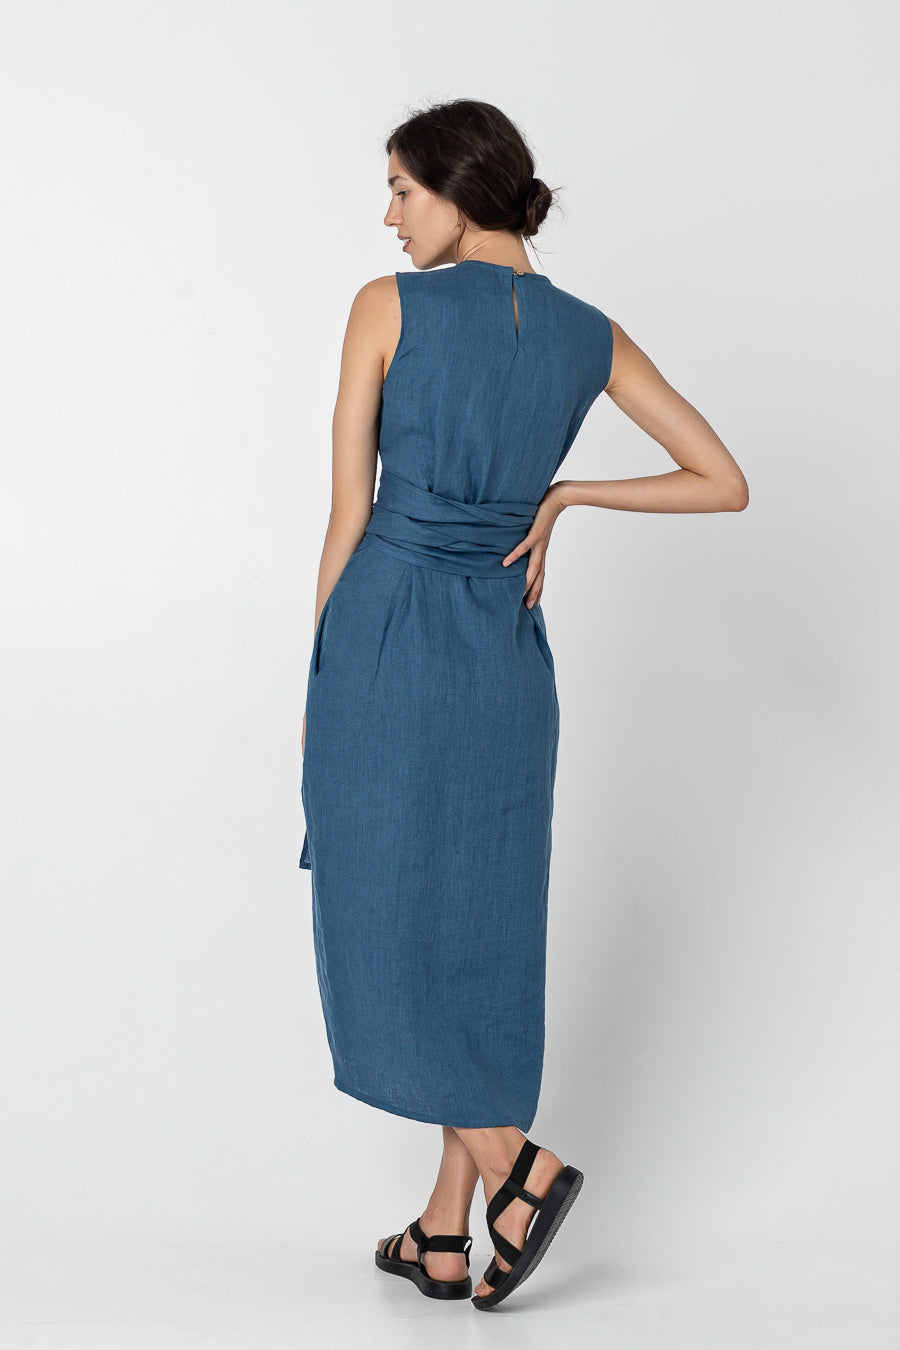 KIRA | Sleeveless linen dress - Mezzoroni